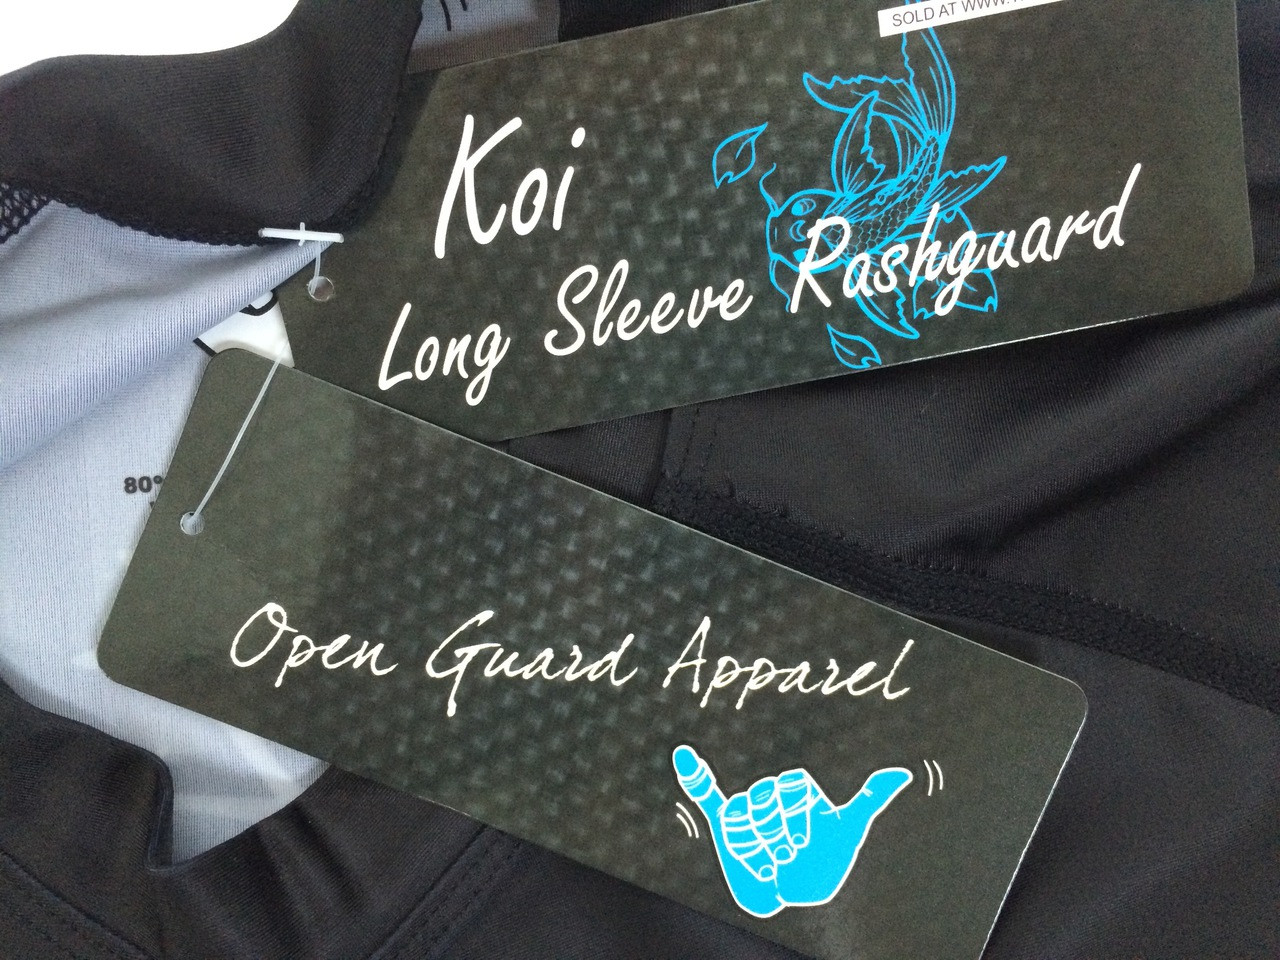 OGA's Kool Koi Long Sleeve Rashguard, sold exclusively by The Jiu Jitsu Shop. Free shipping, storewide.